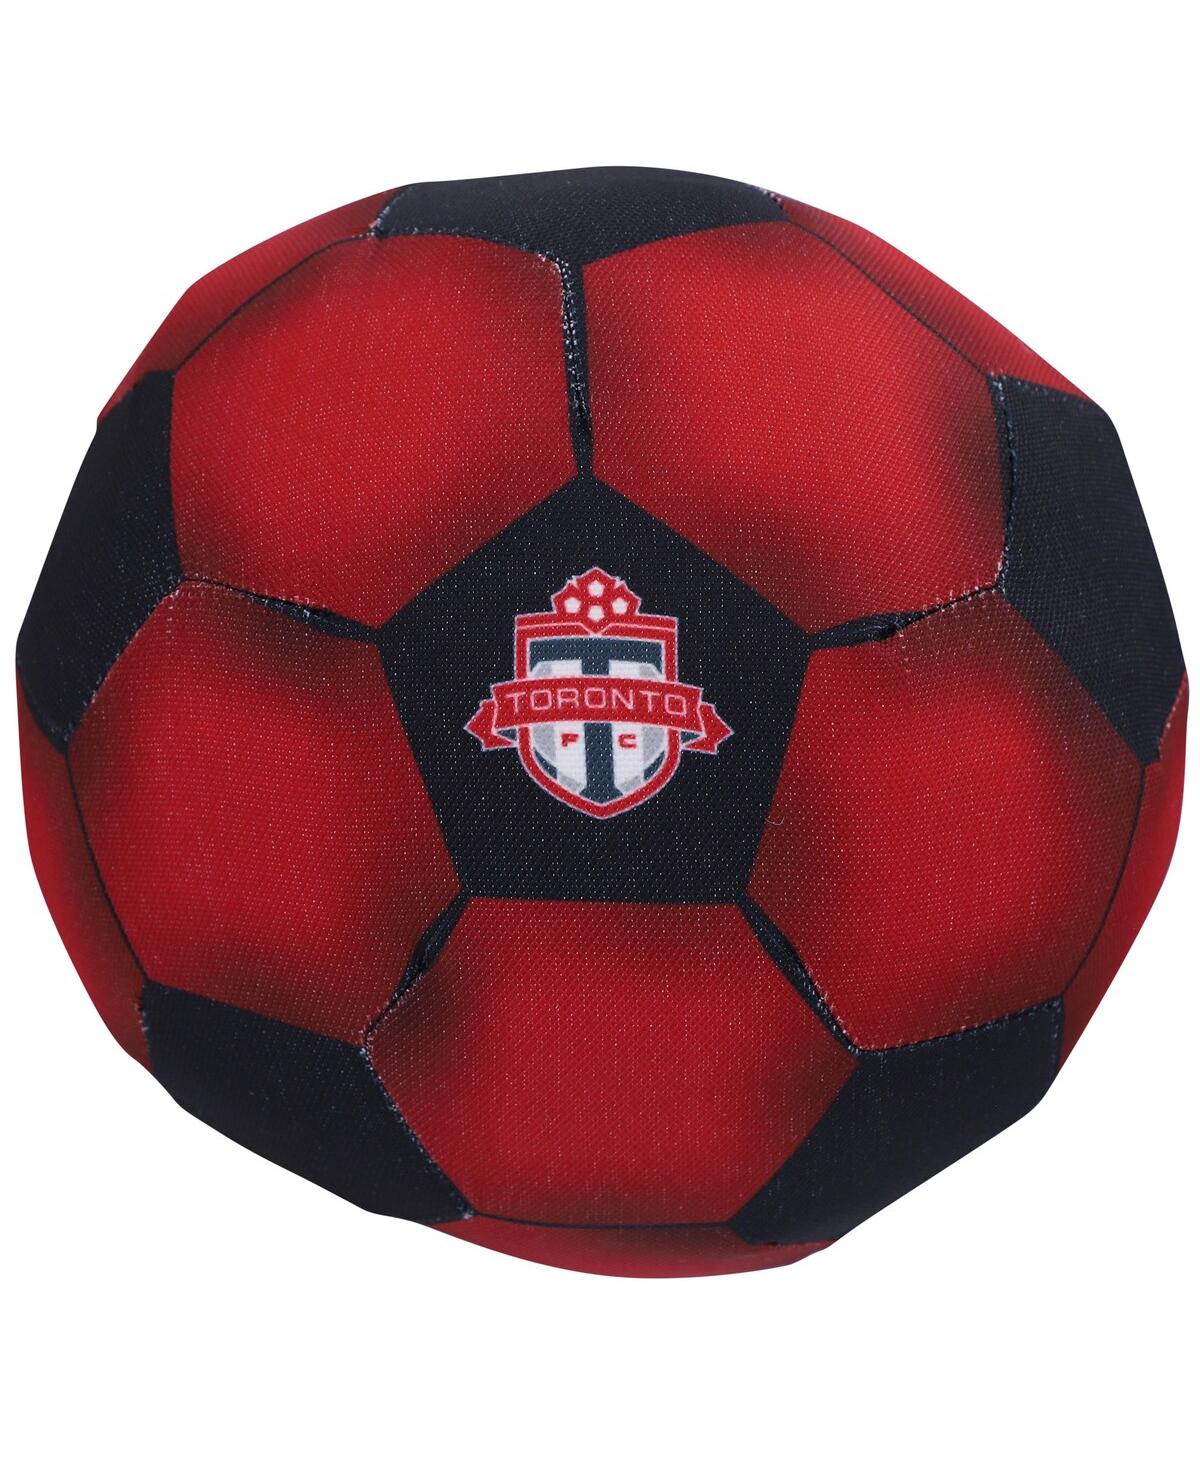 Toronto Fc Soccer Ball Plush Dog Toy - Red